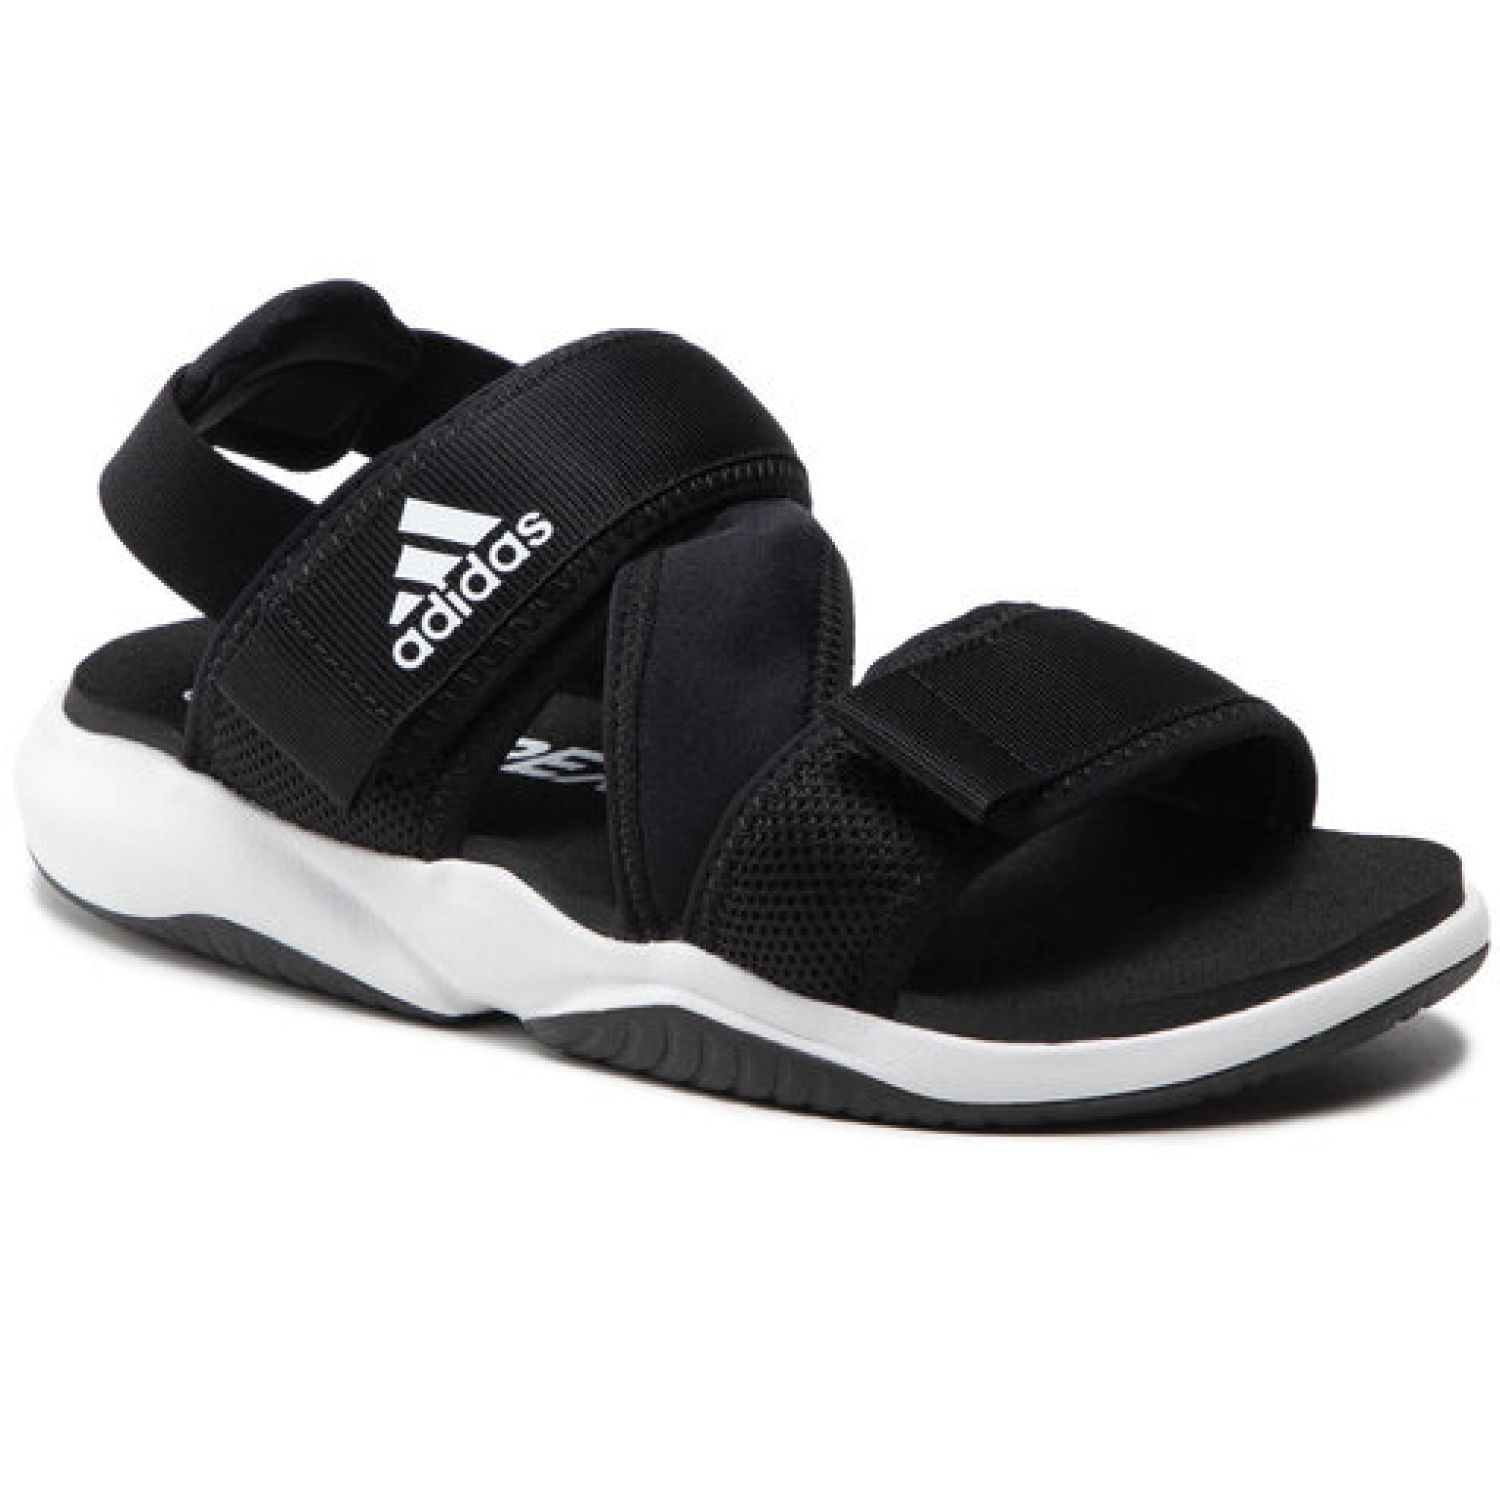 3024 - Adidas Terrex Sumra Sandals Blk | Item Details - Easy Sole